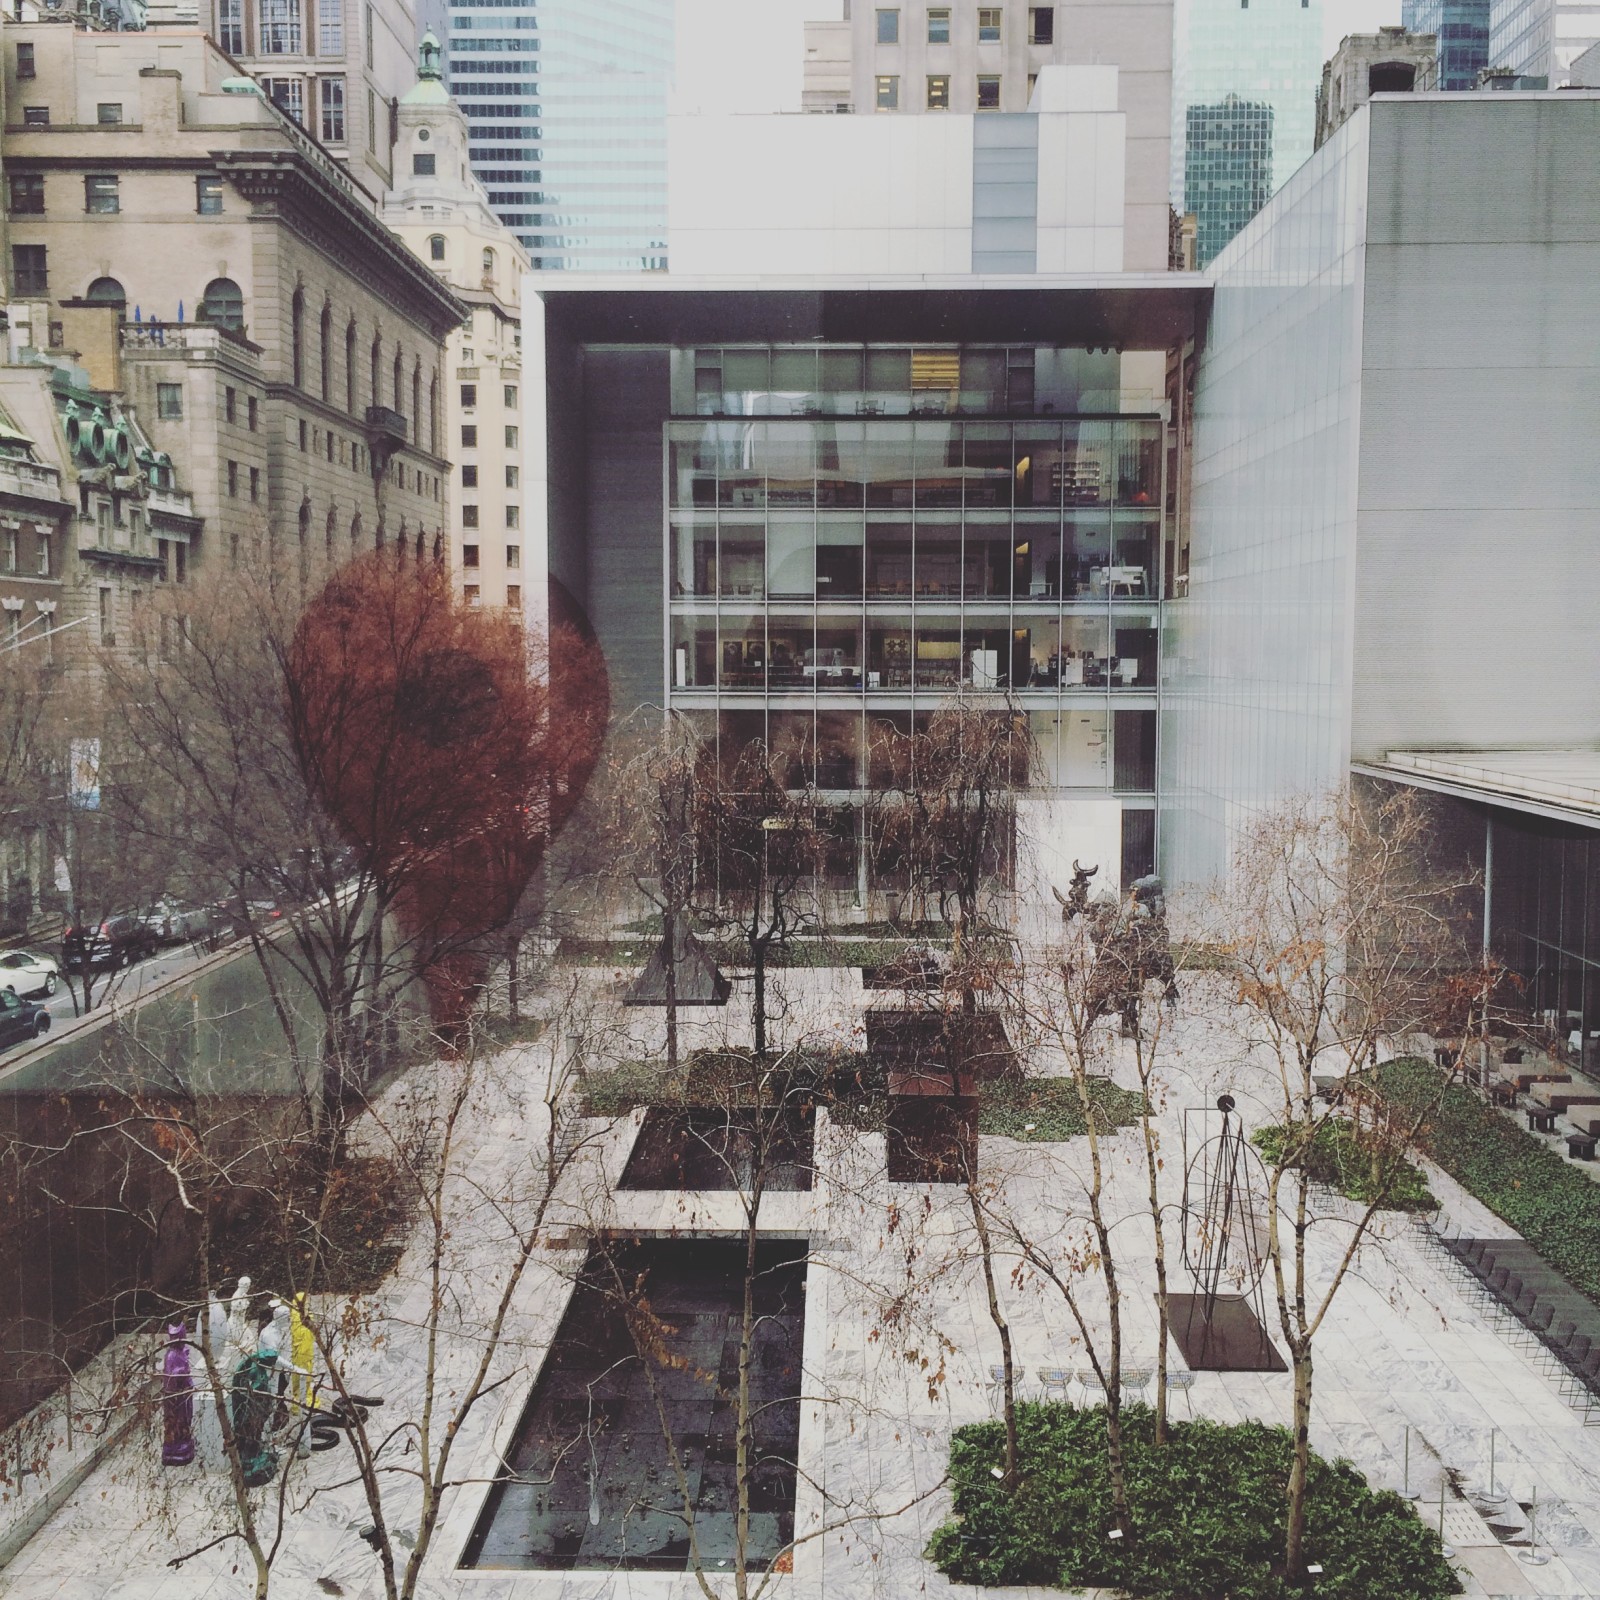 MUSEUM OF MODERN ART (MOMA), NYC